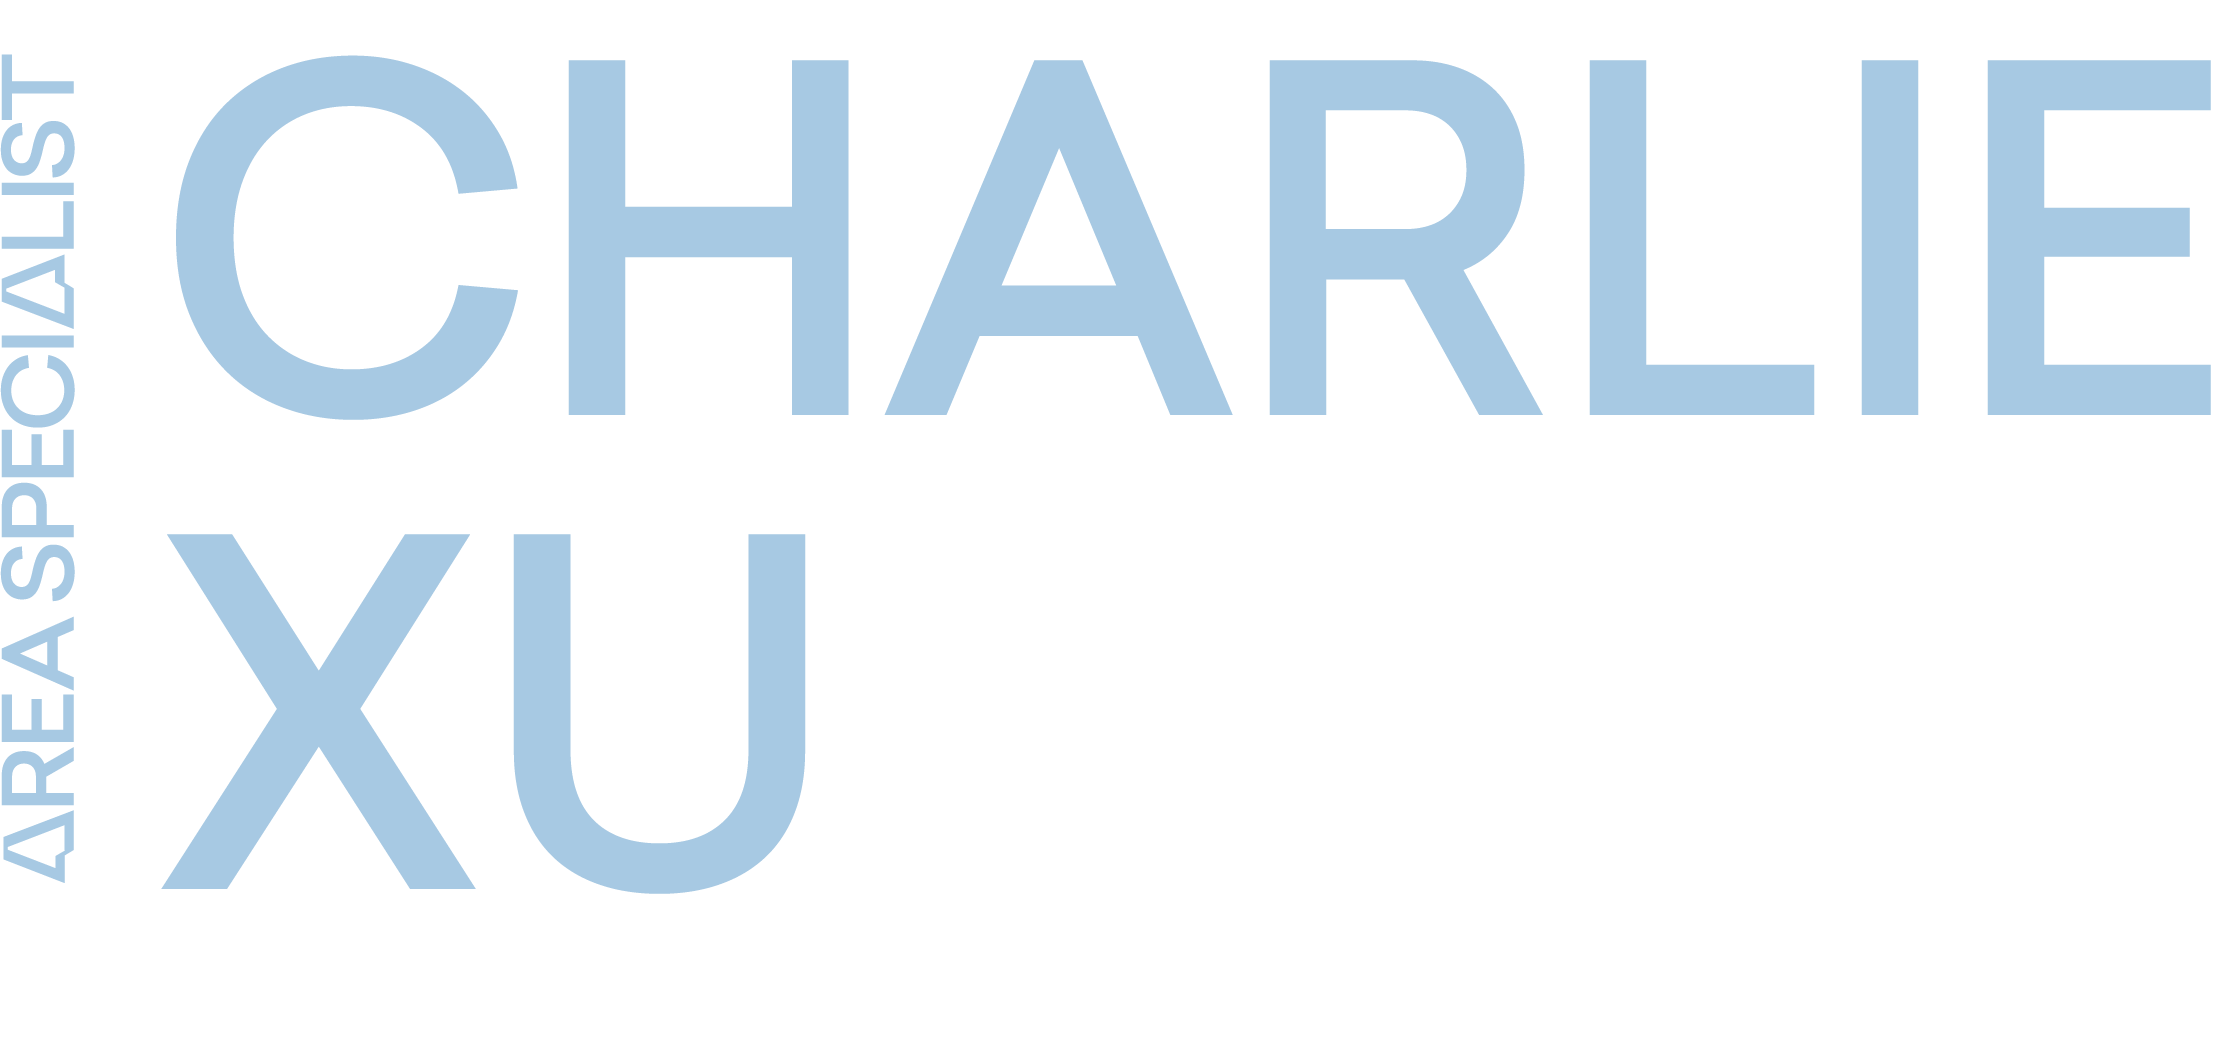 Charlie's logo